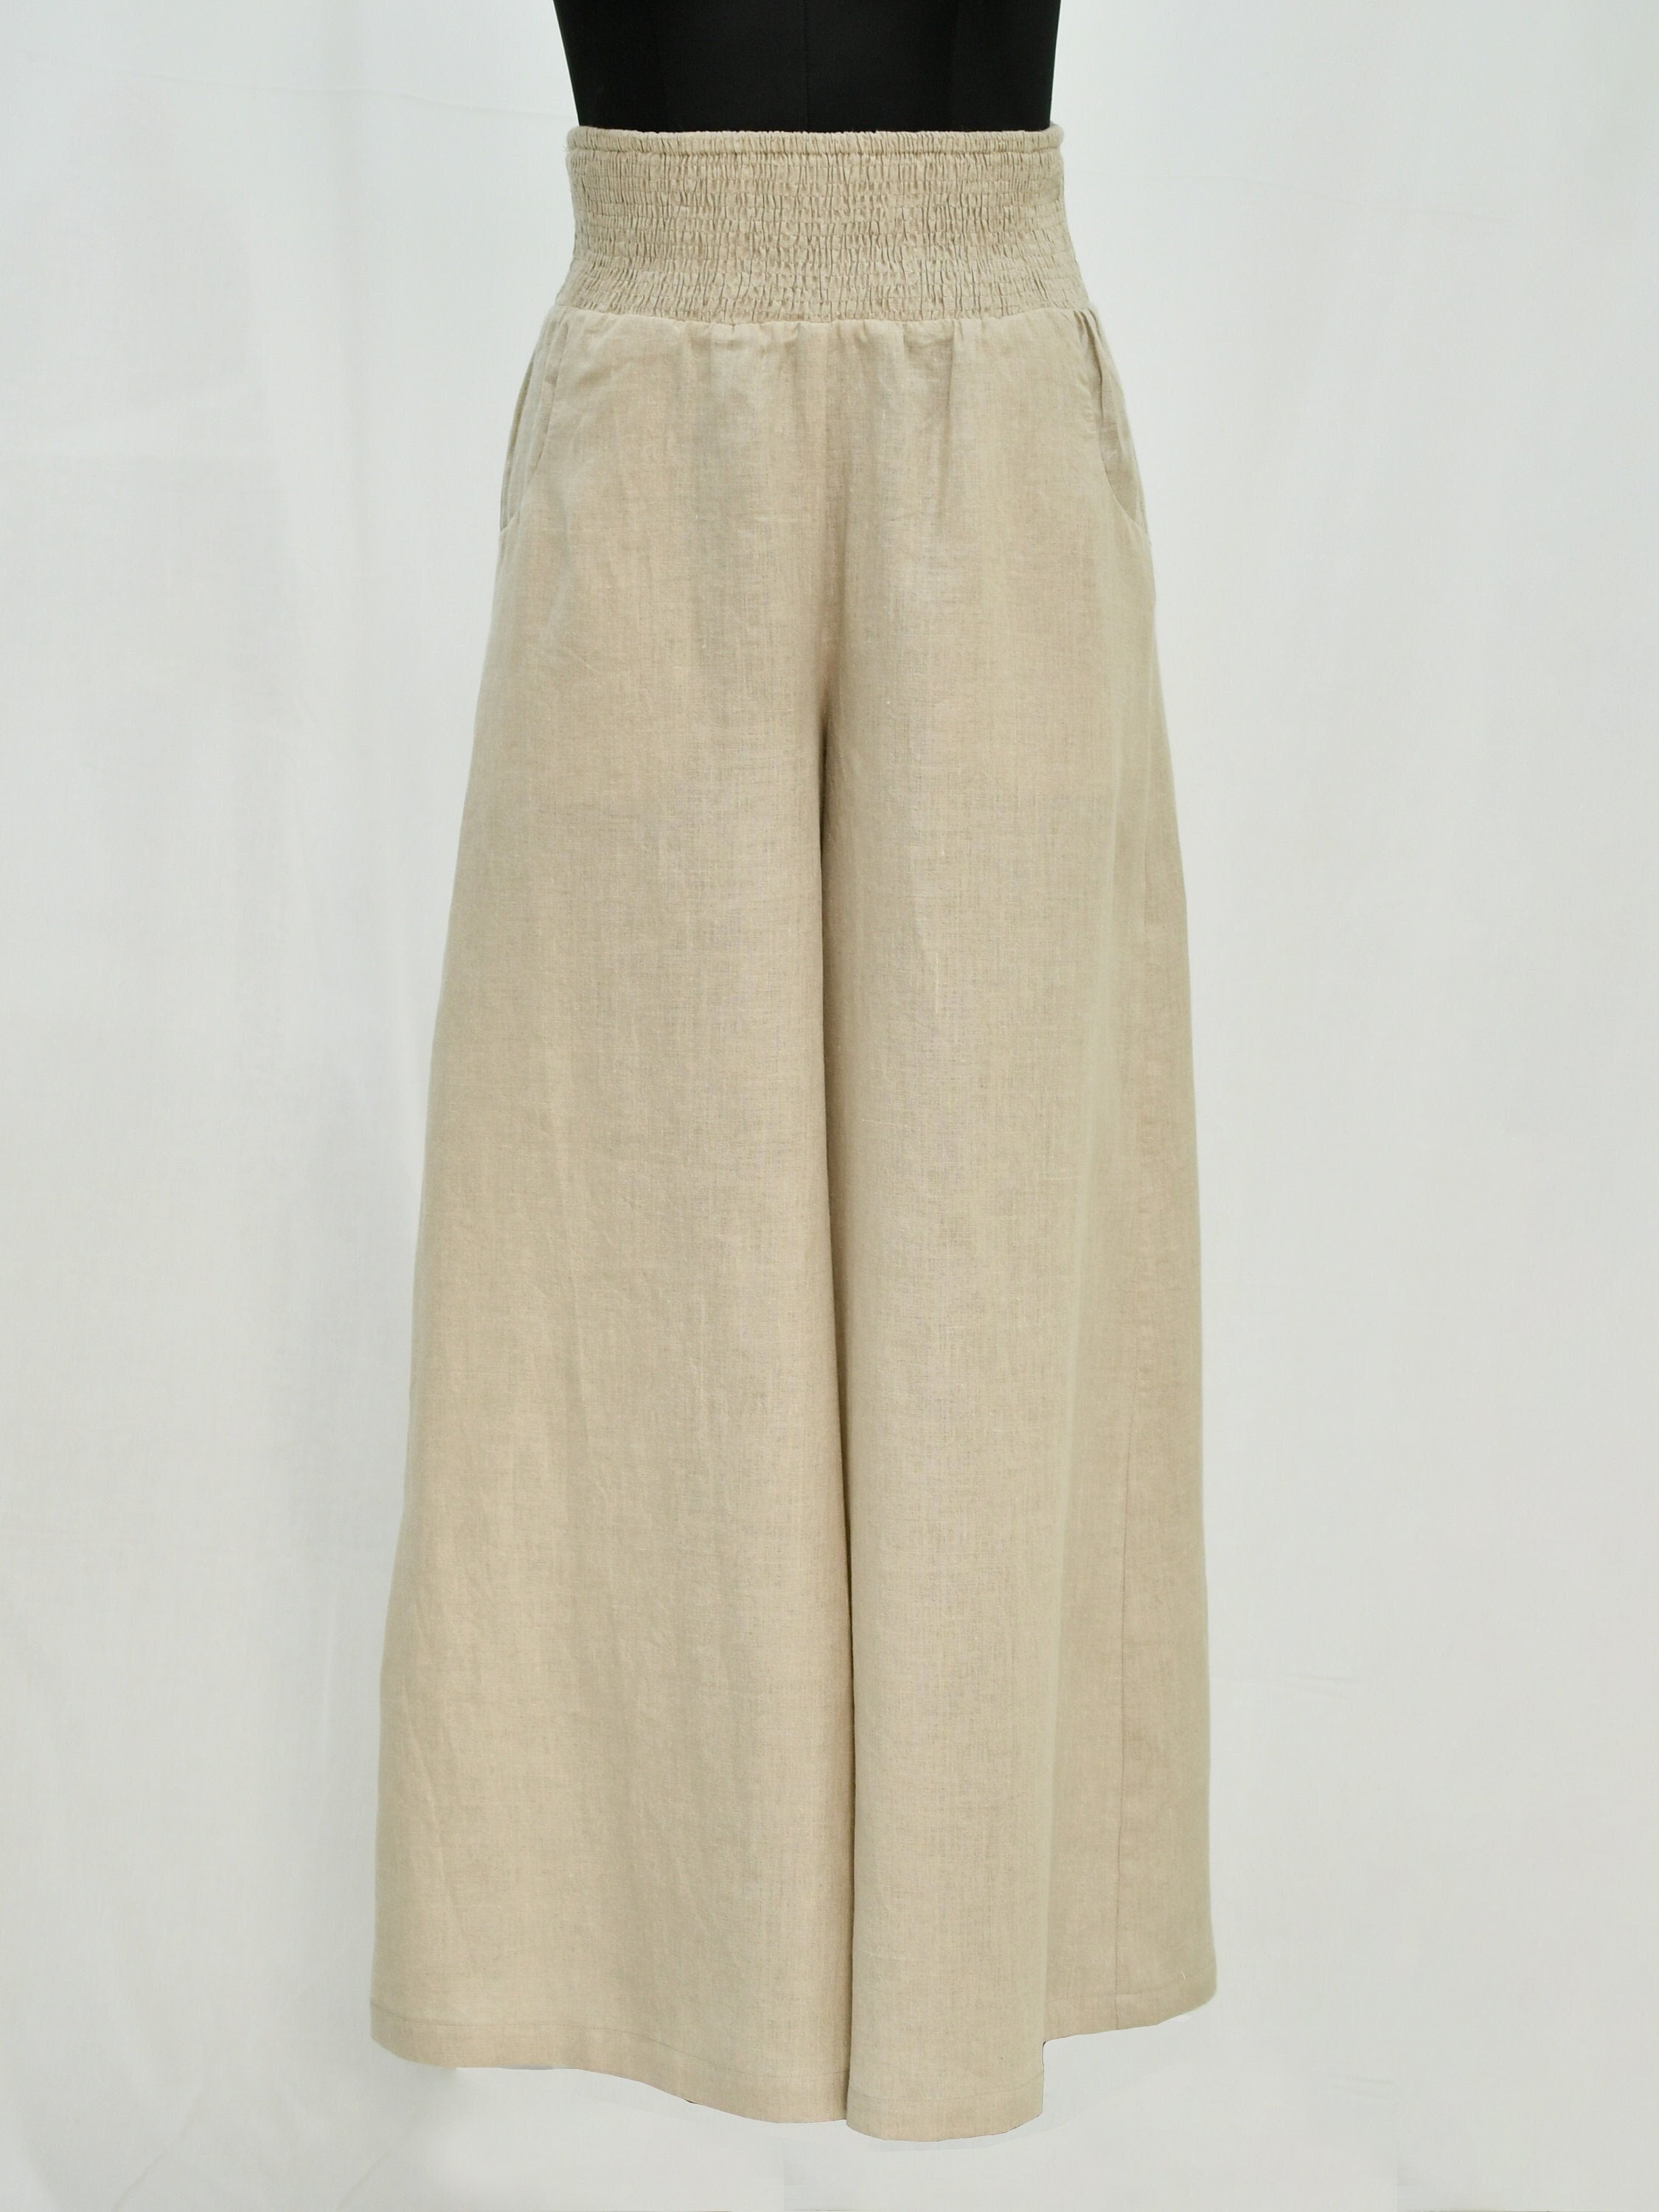 Harem Pants-women Baggy Pants-loose Fit-comfortable Clothes Pant-comfy Pants-teal  Cotton Pants-dance Clothing-bohemian Boho-edgy Fashion 